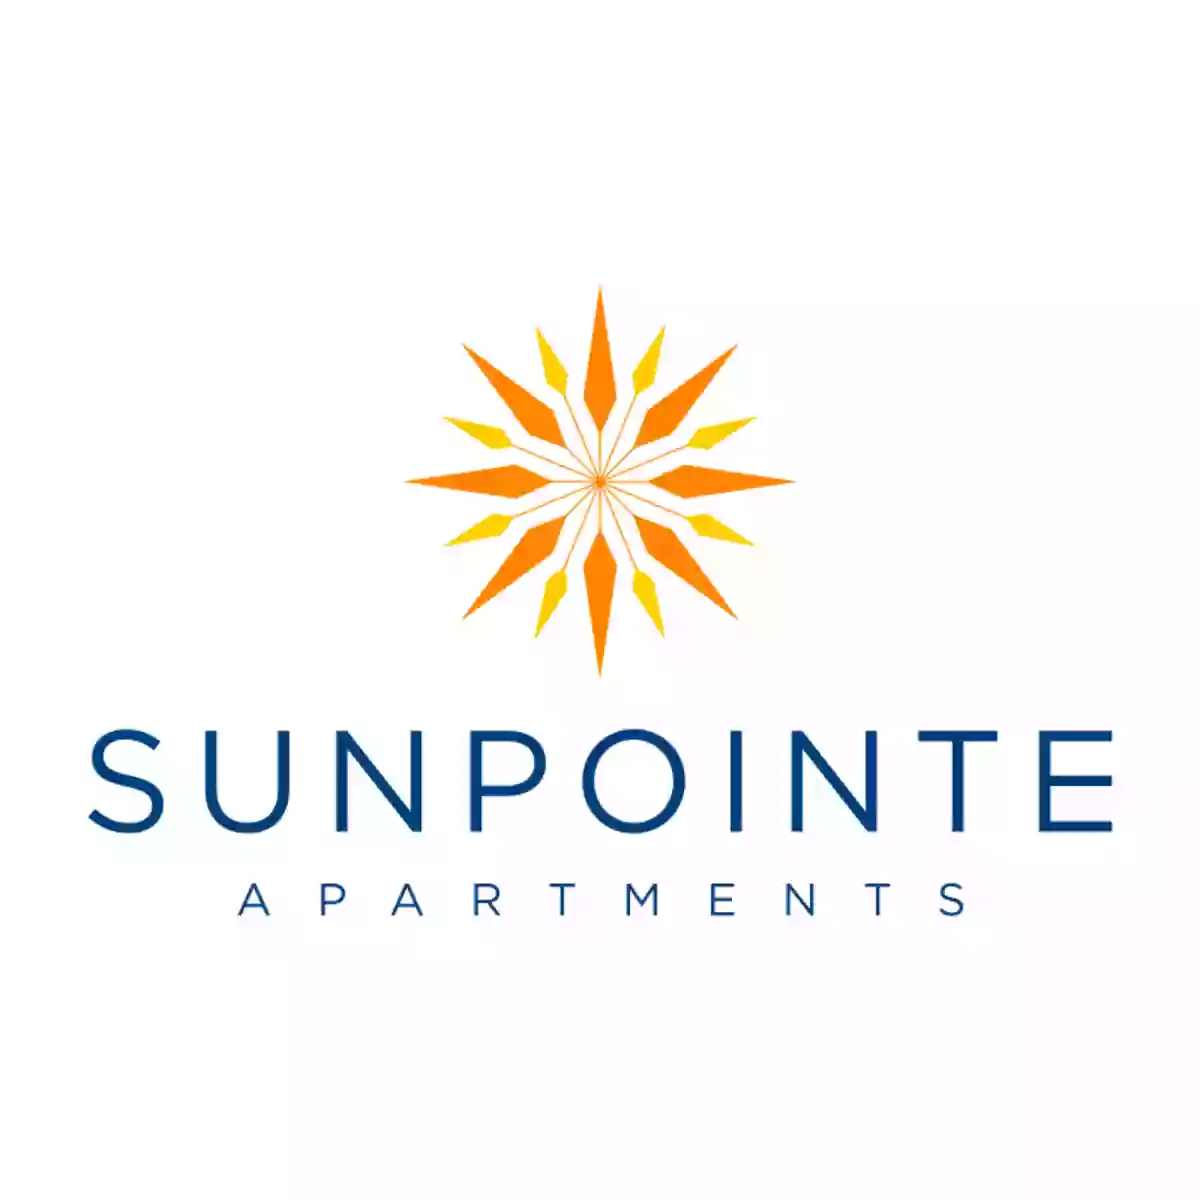 Sunpointe Apartments